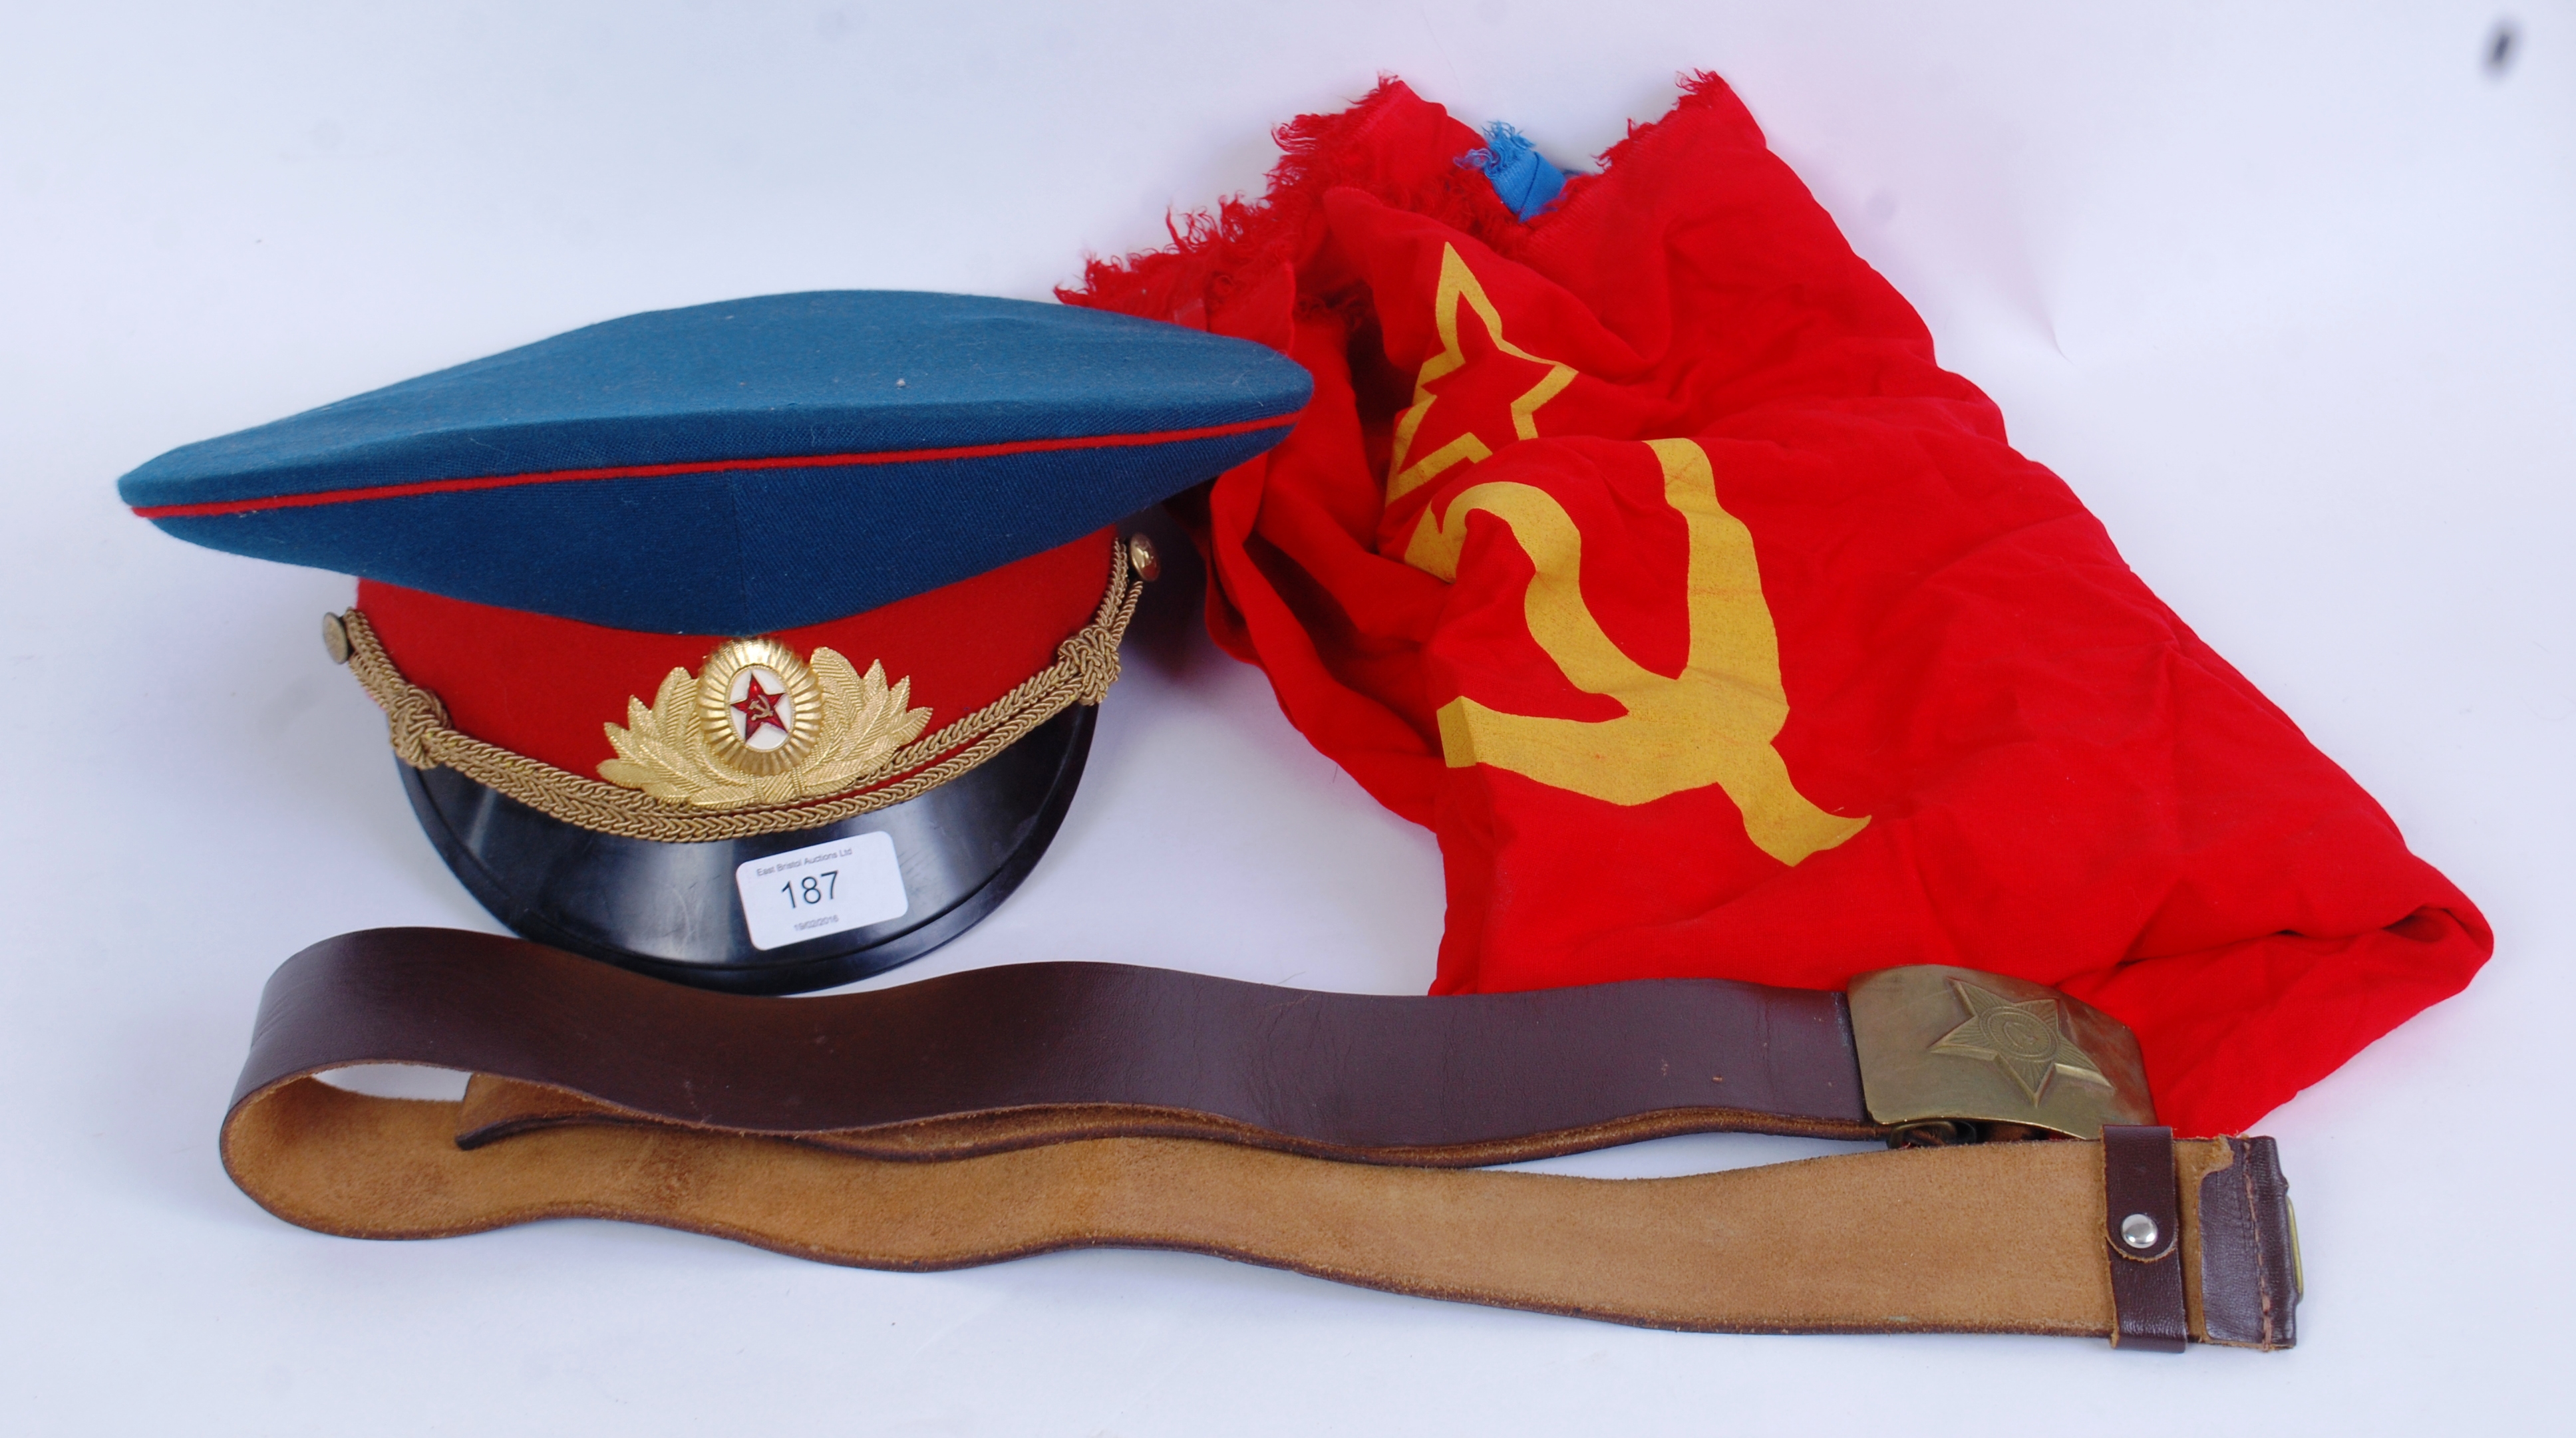 RUSSIAN MILITARY: An original vintage Russian military peaked cap,